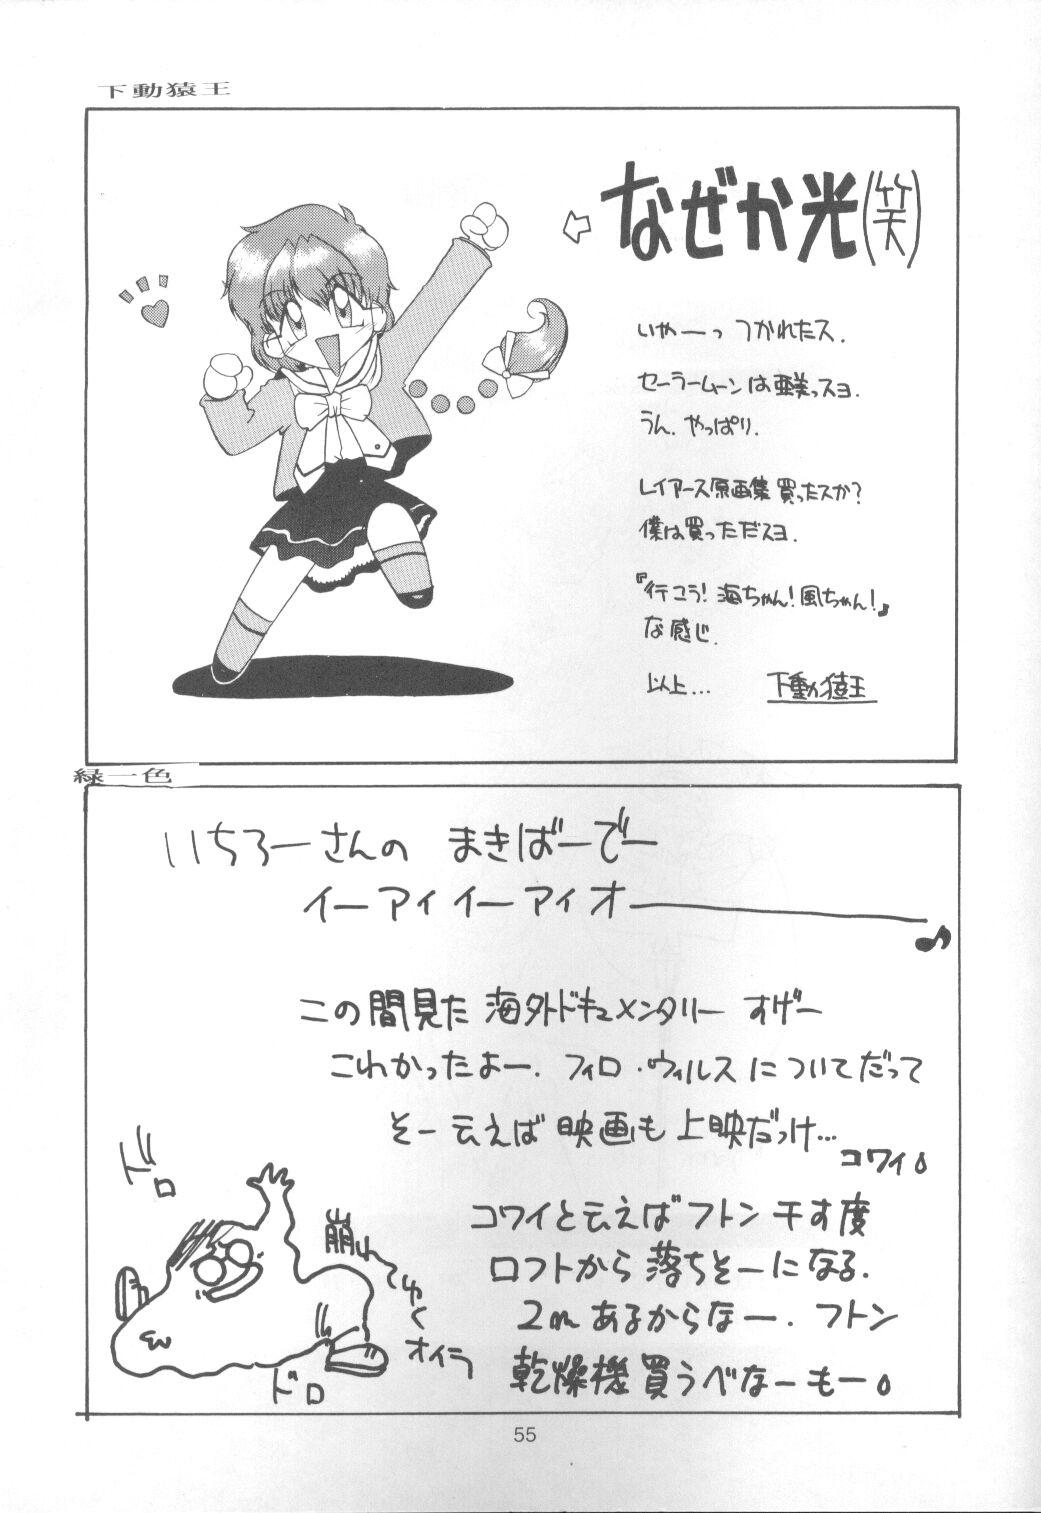 De Quatro Tabeta Kigasuru 9 - Sailor moon Bucetinha - Page 54